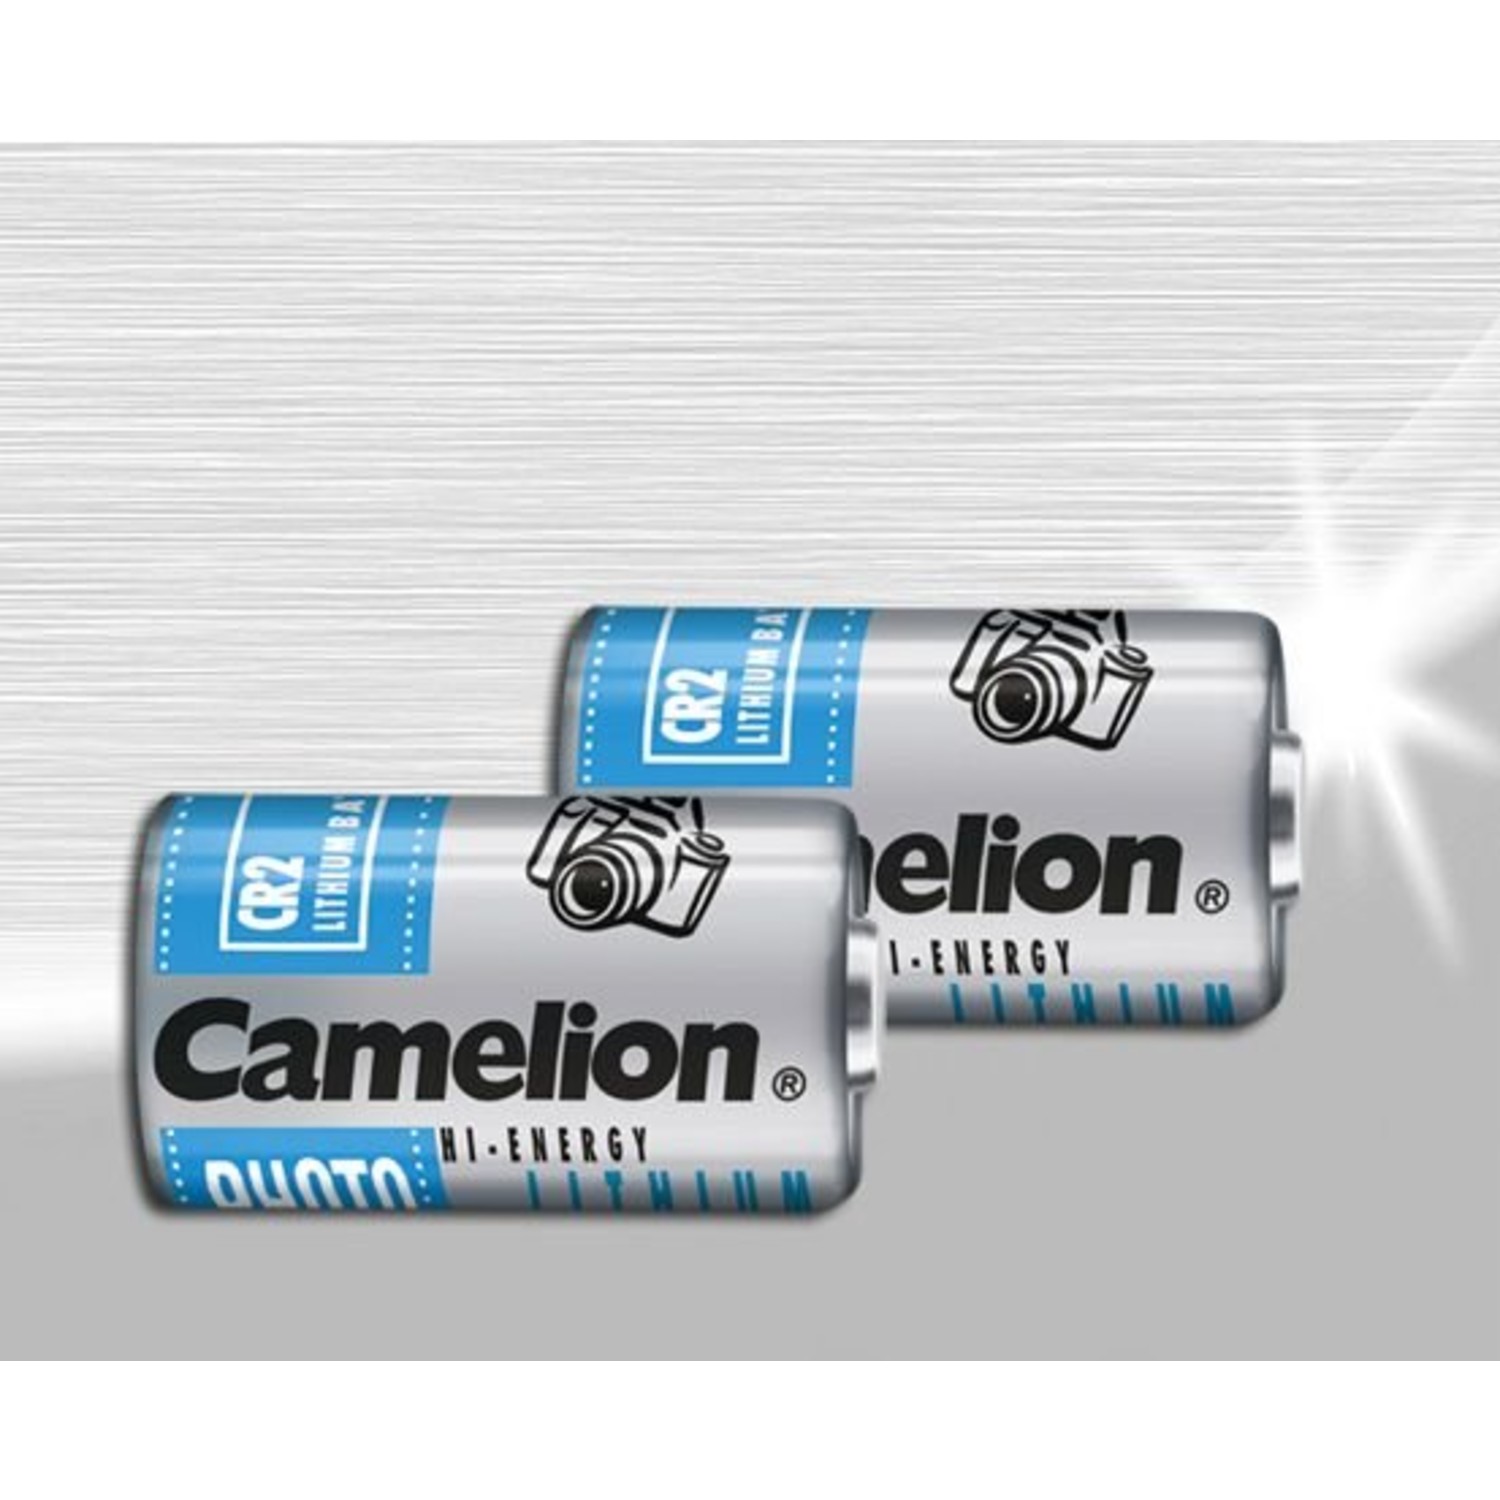 Krijt veld Manie CR2 lithium batterij 3V Camelion - Beterbatterij